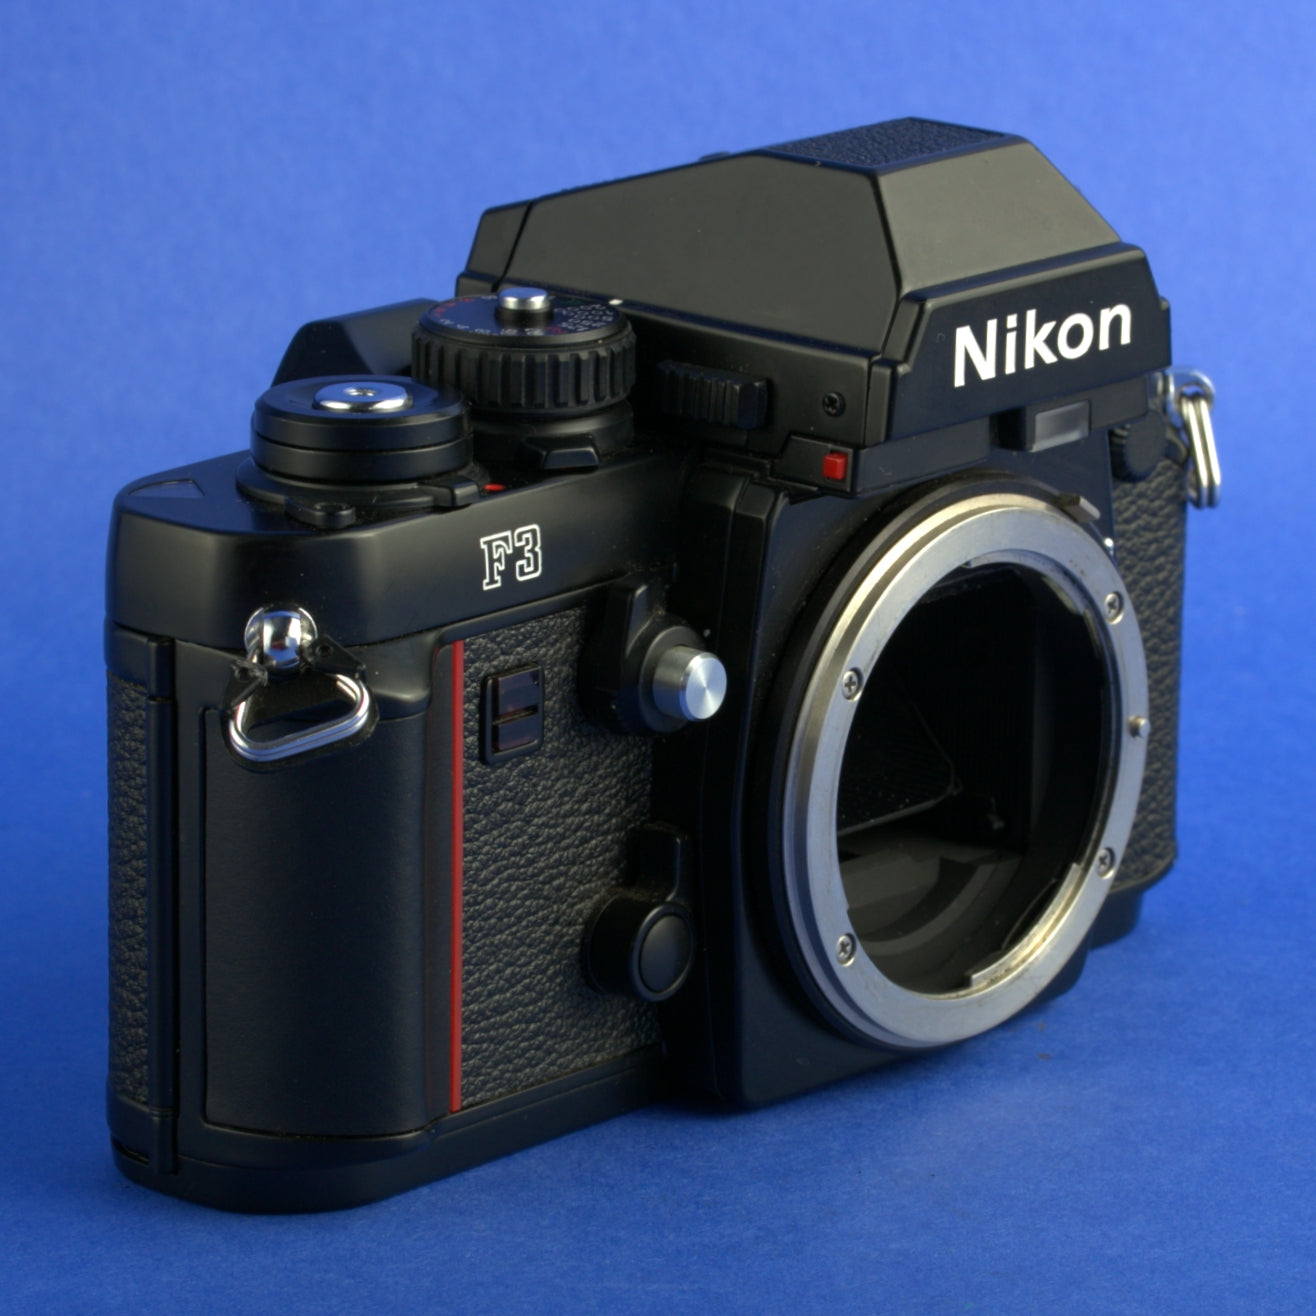 Stunning Nikon F3 Film Camera Body Near Mint Condition